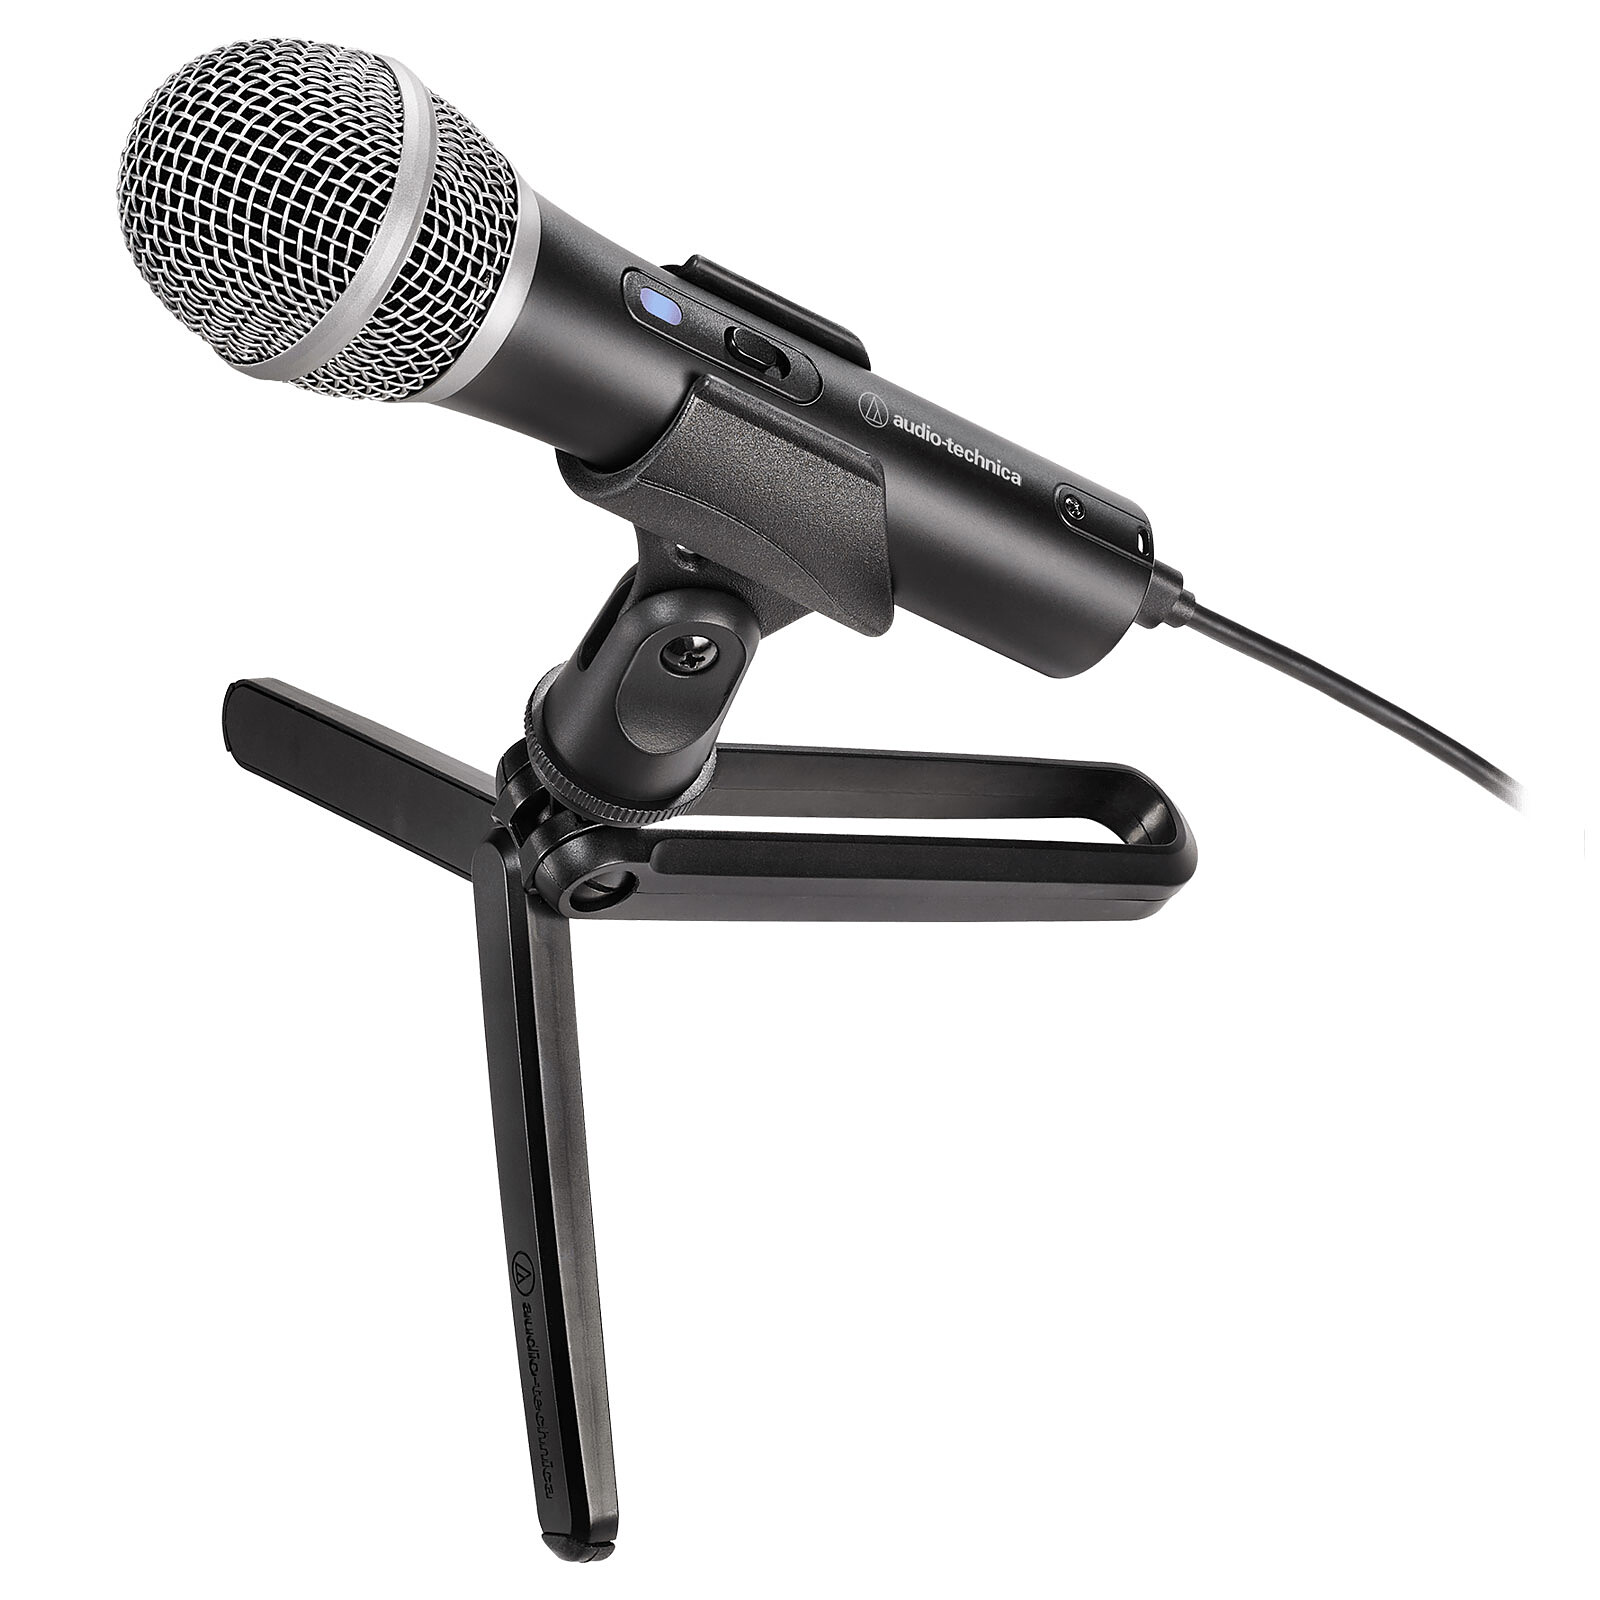 Audio-Technica Creator Pack Review - Audio-Technica ATR2500x-USB Microphone